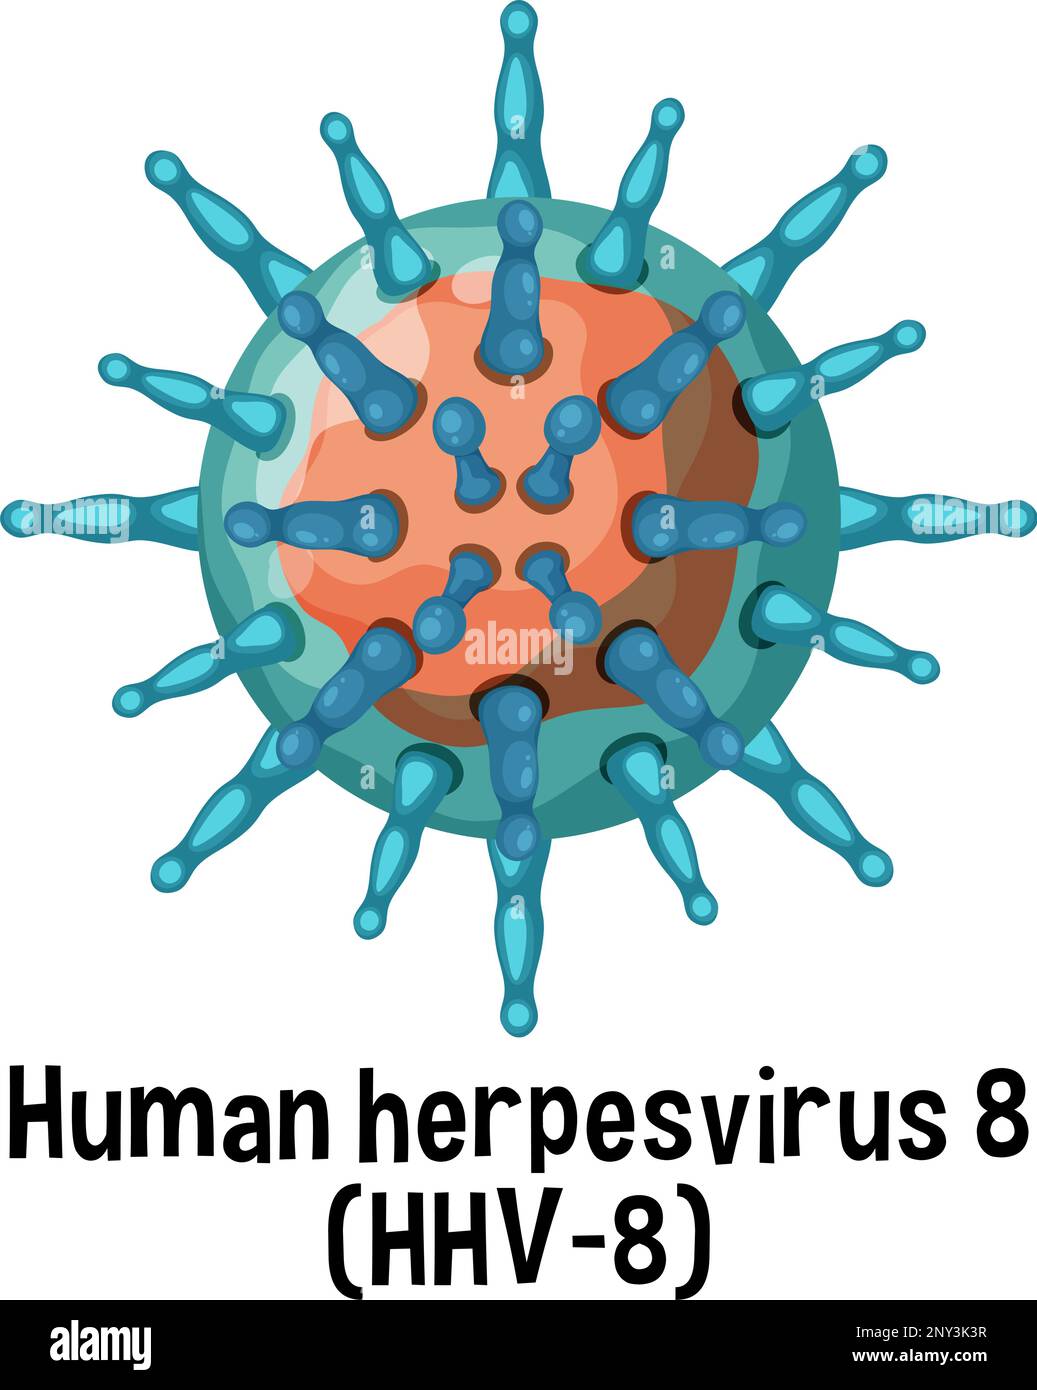 Human herpesvirus 8 (HHV 8) with text illustration Stock Vector